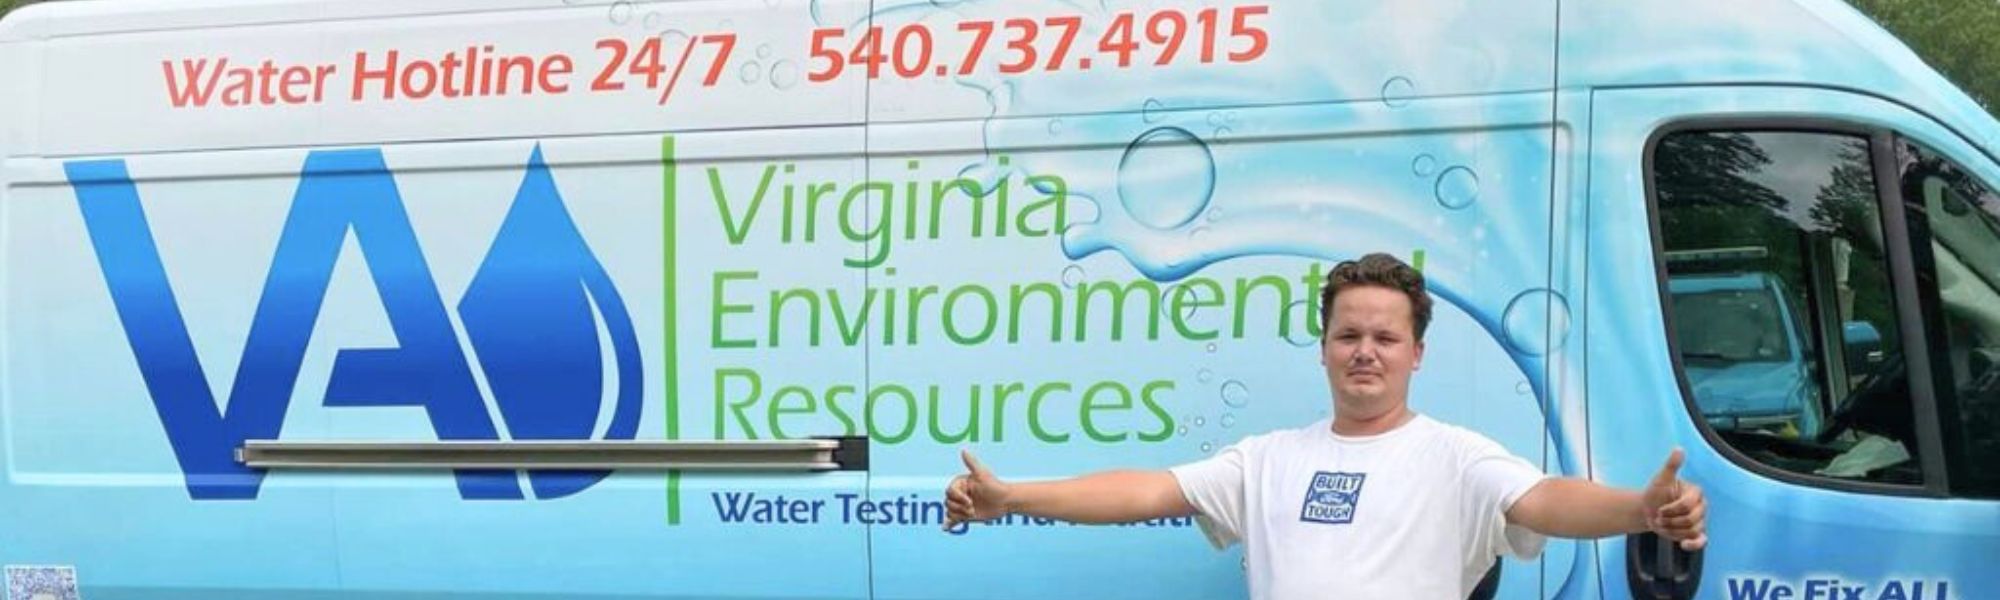 Top Water Treatment Company in Manassas, VA